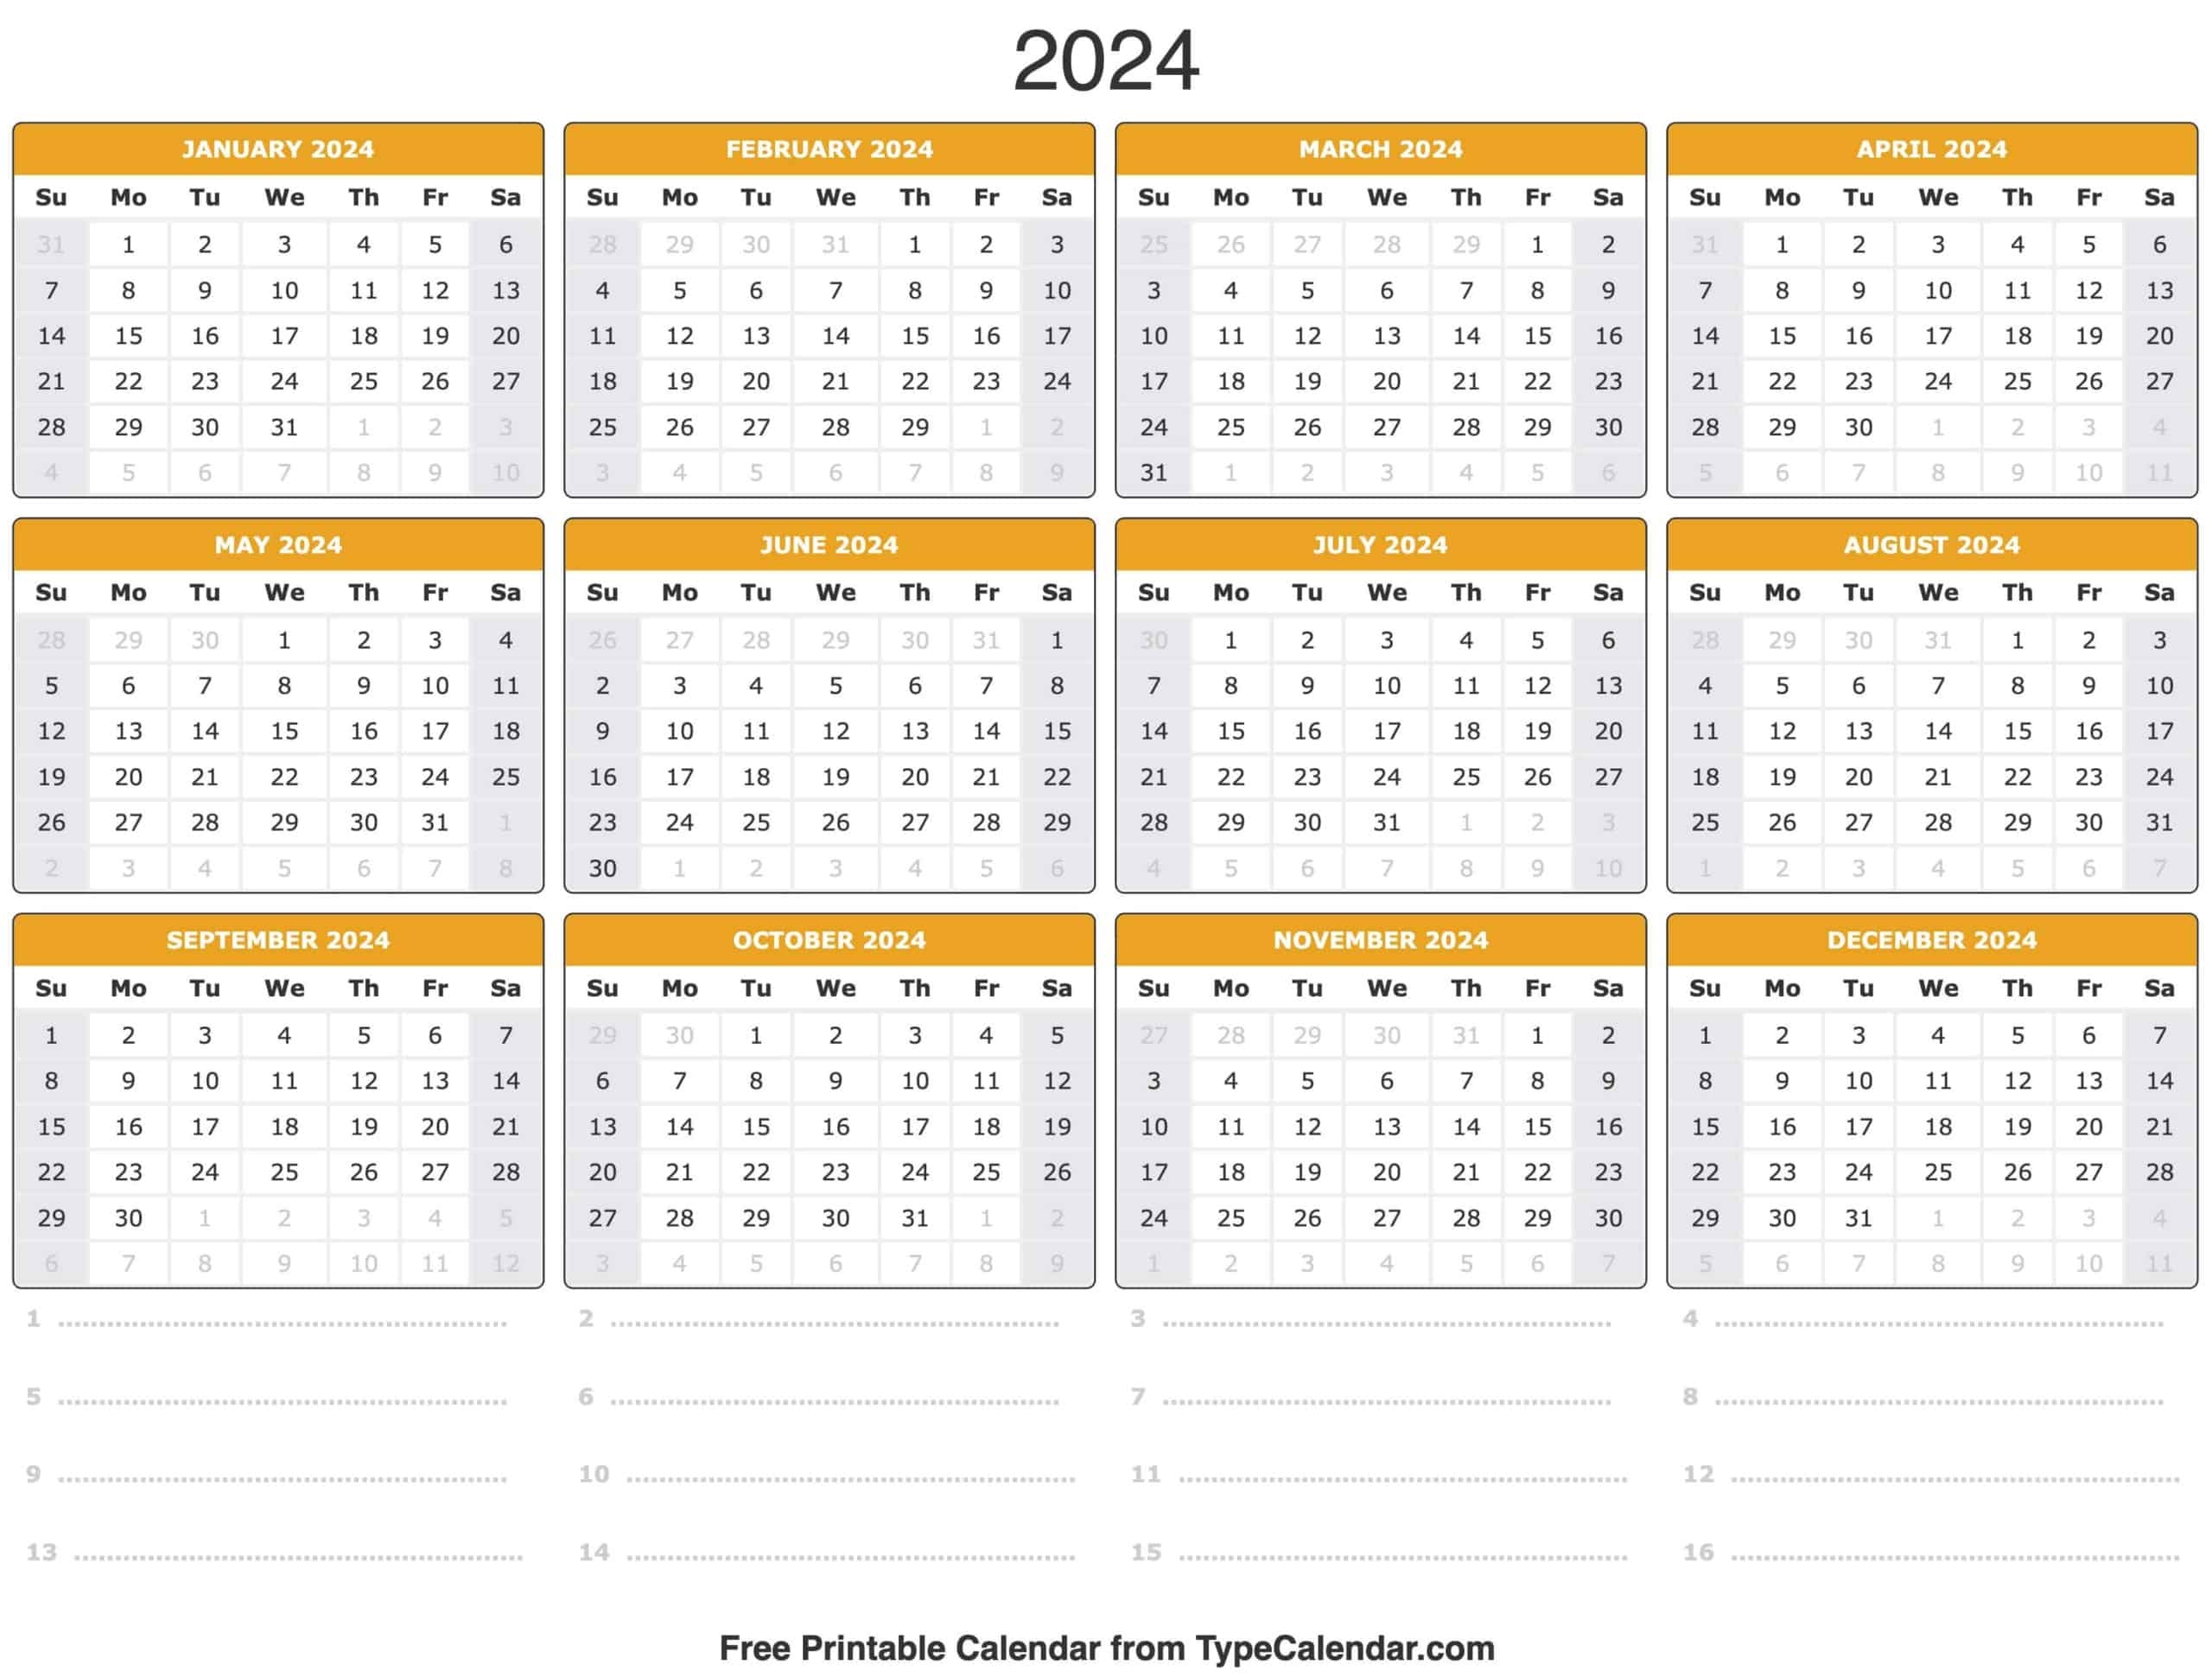 2024 Calendar: Free Printable Calendar With Holidays in Free Printable Calendar 2024 Word Format